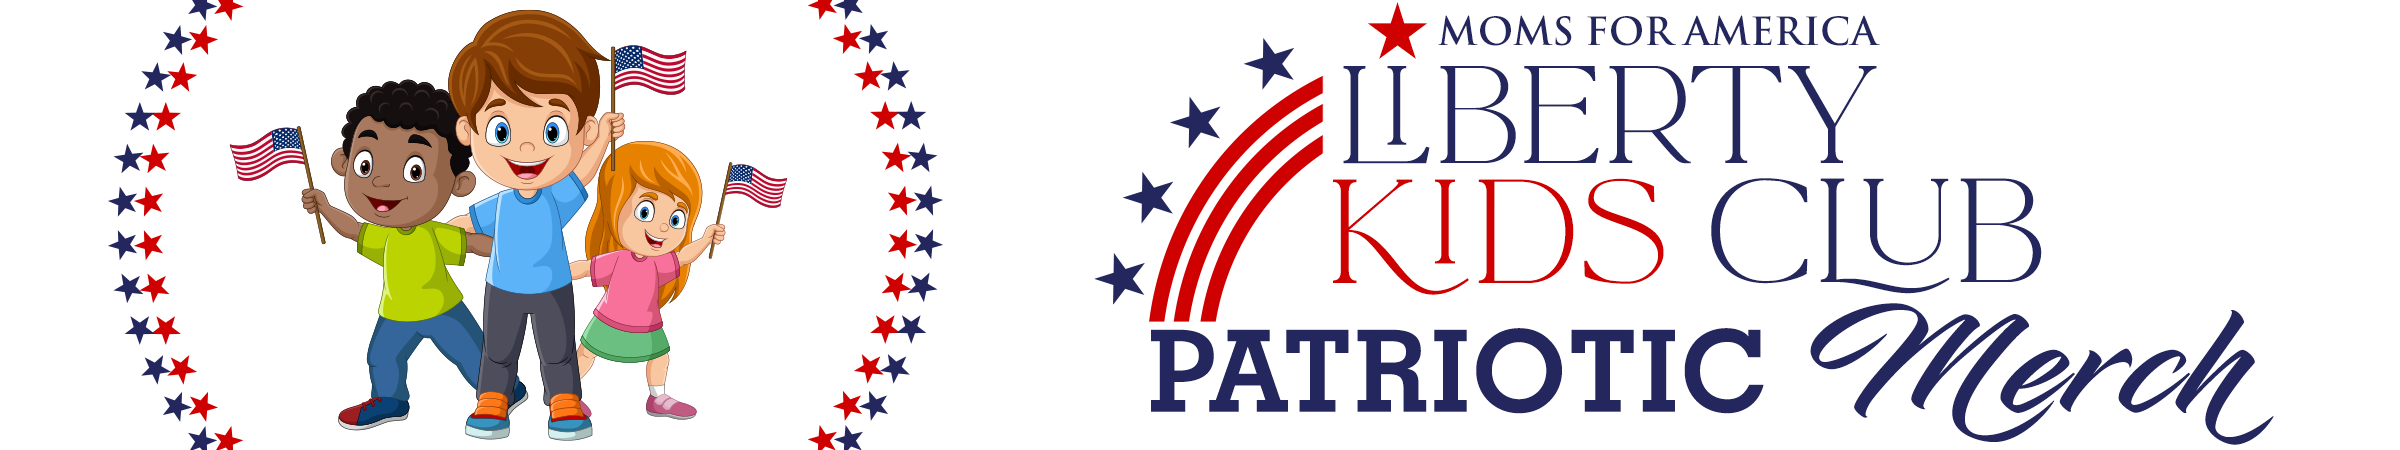 Patriotic Merchandise - Liberty Kids Club - Moms for America